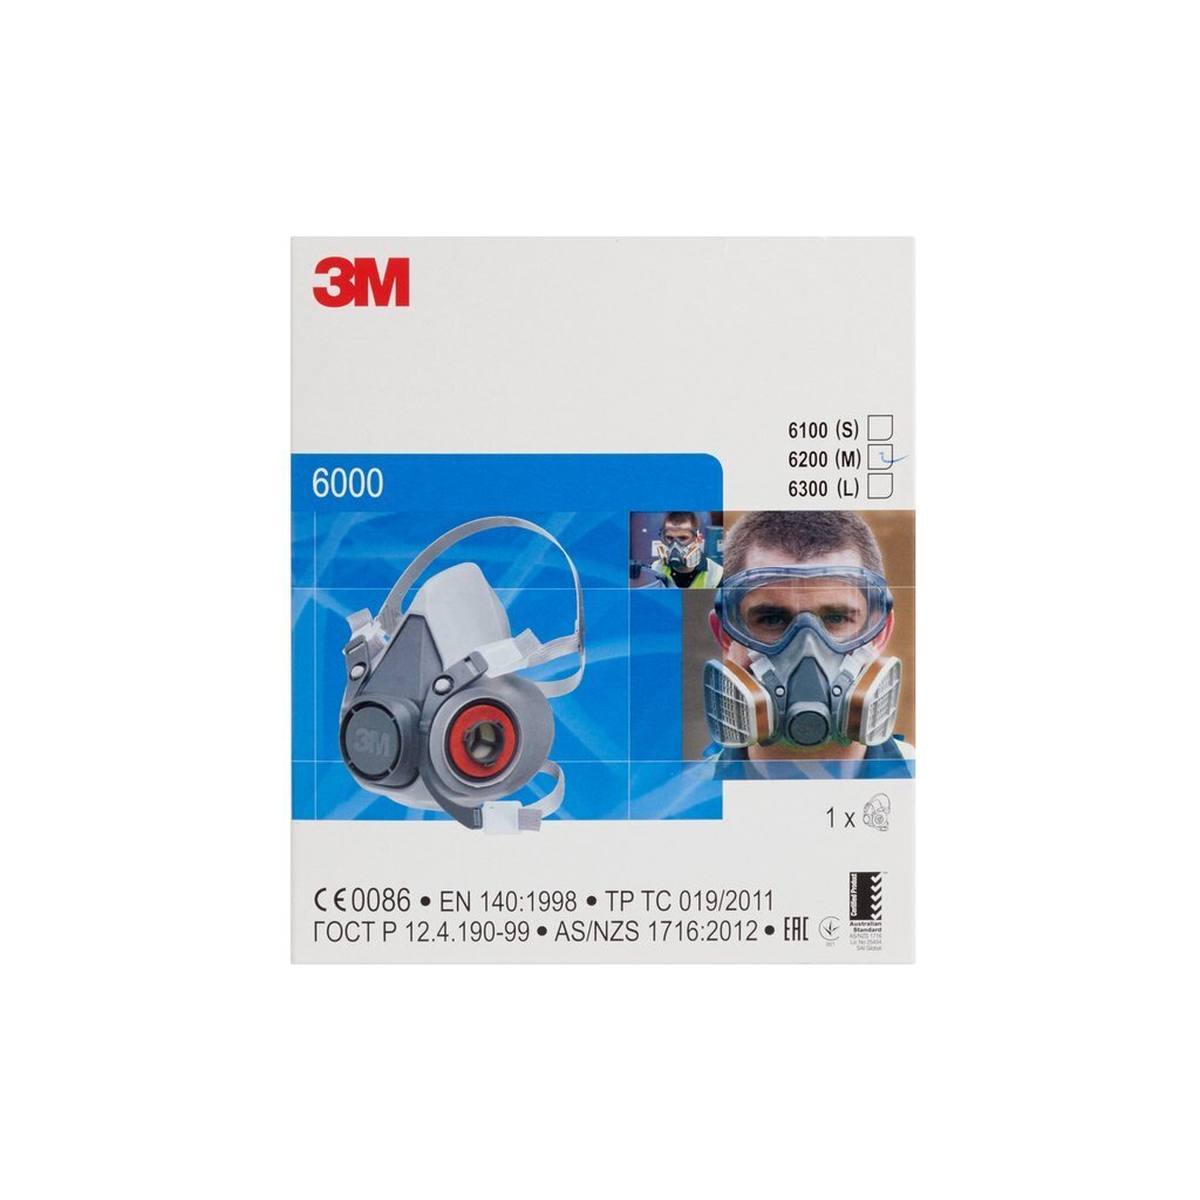 3M 6200M Half mask body Thermoplastic elastomer/polypropylene Size M